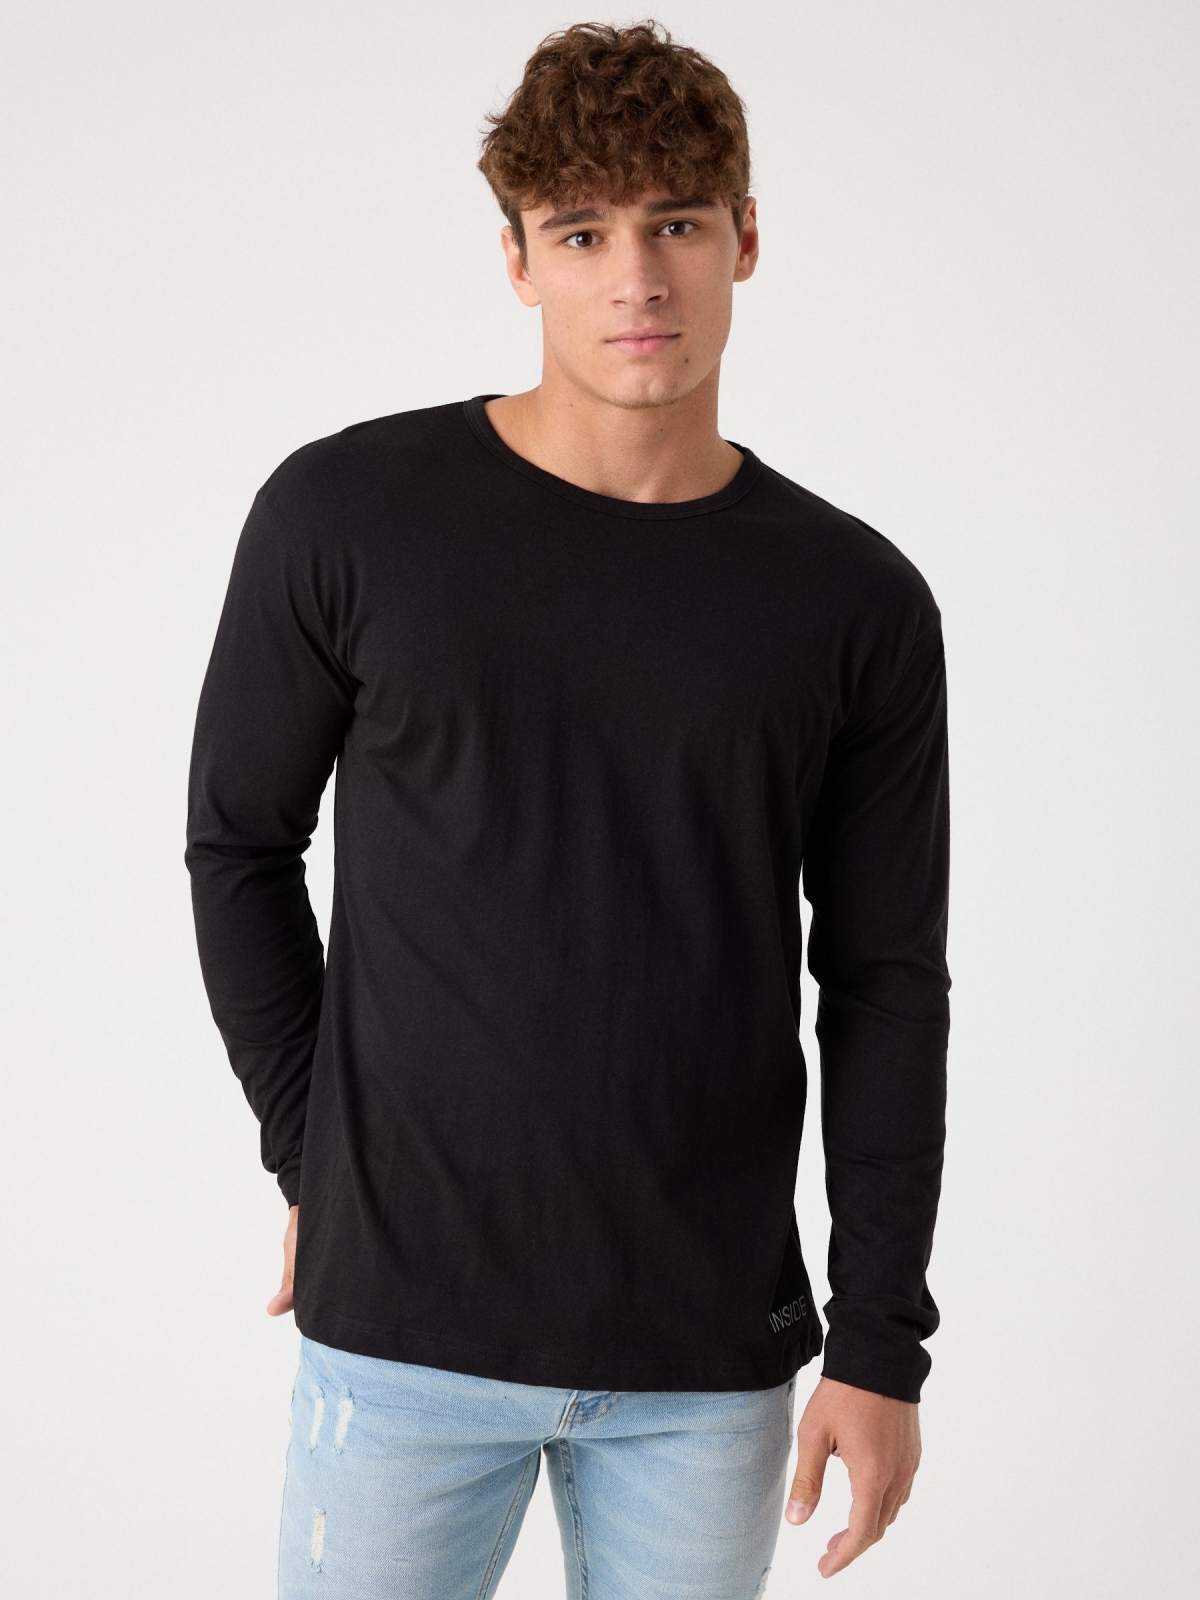 T-shirt básica de manga comprida preto vista meia frontal